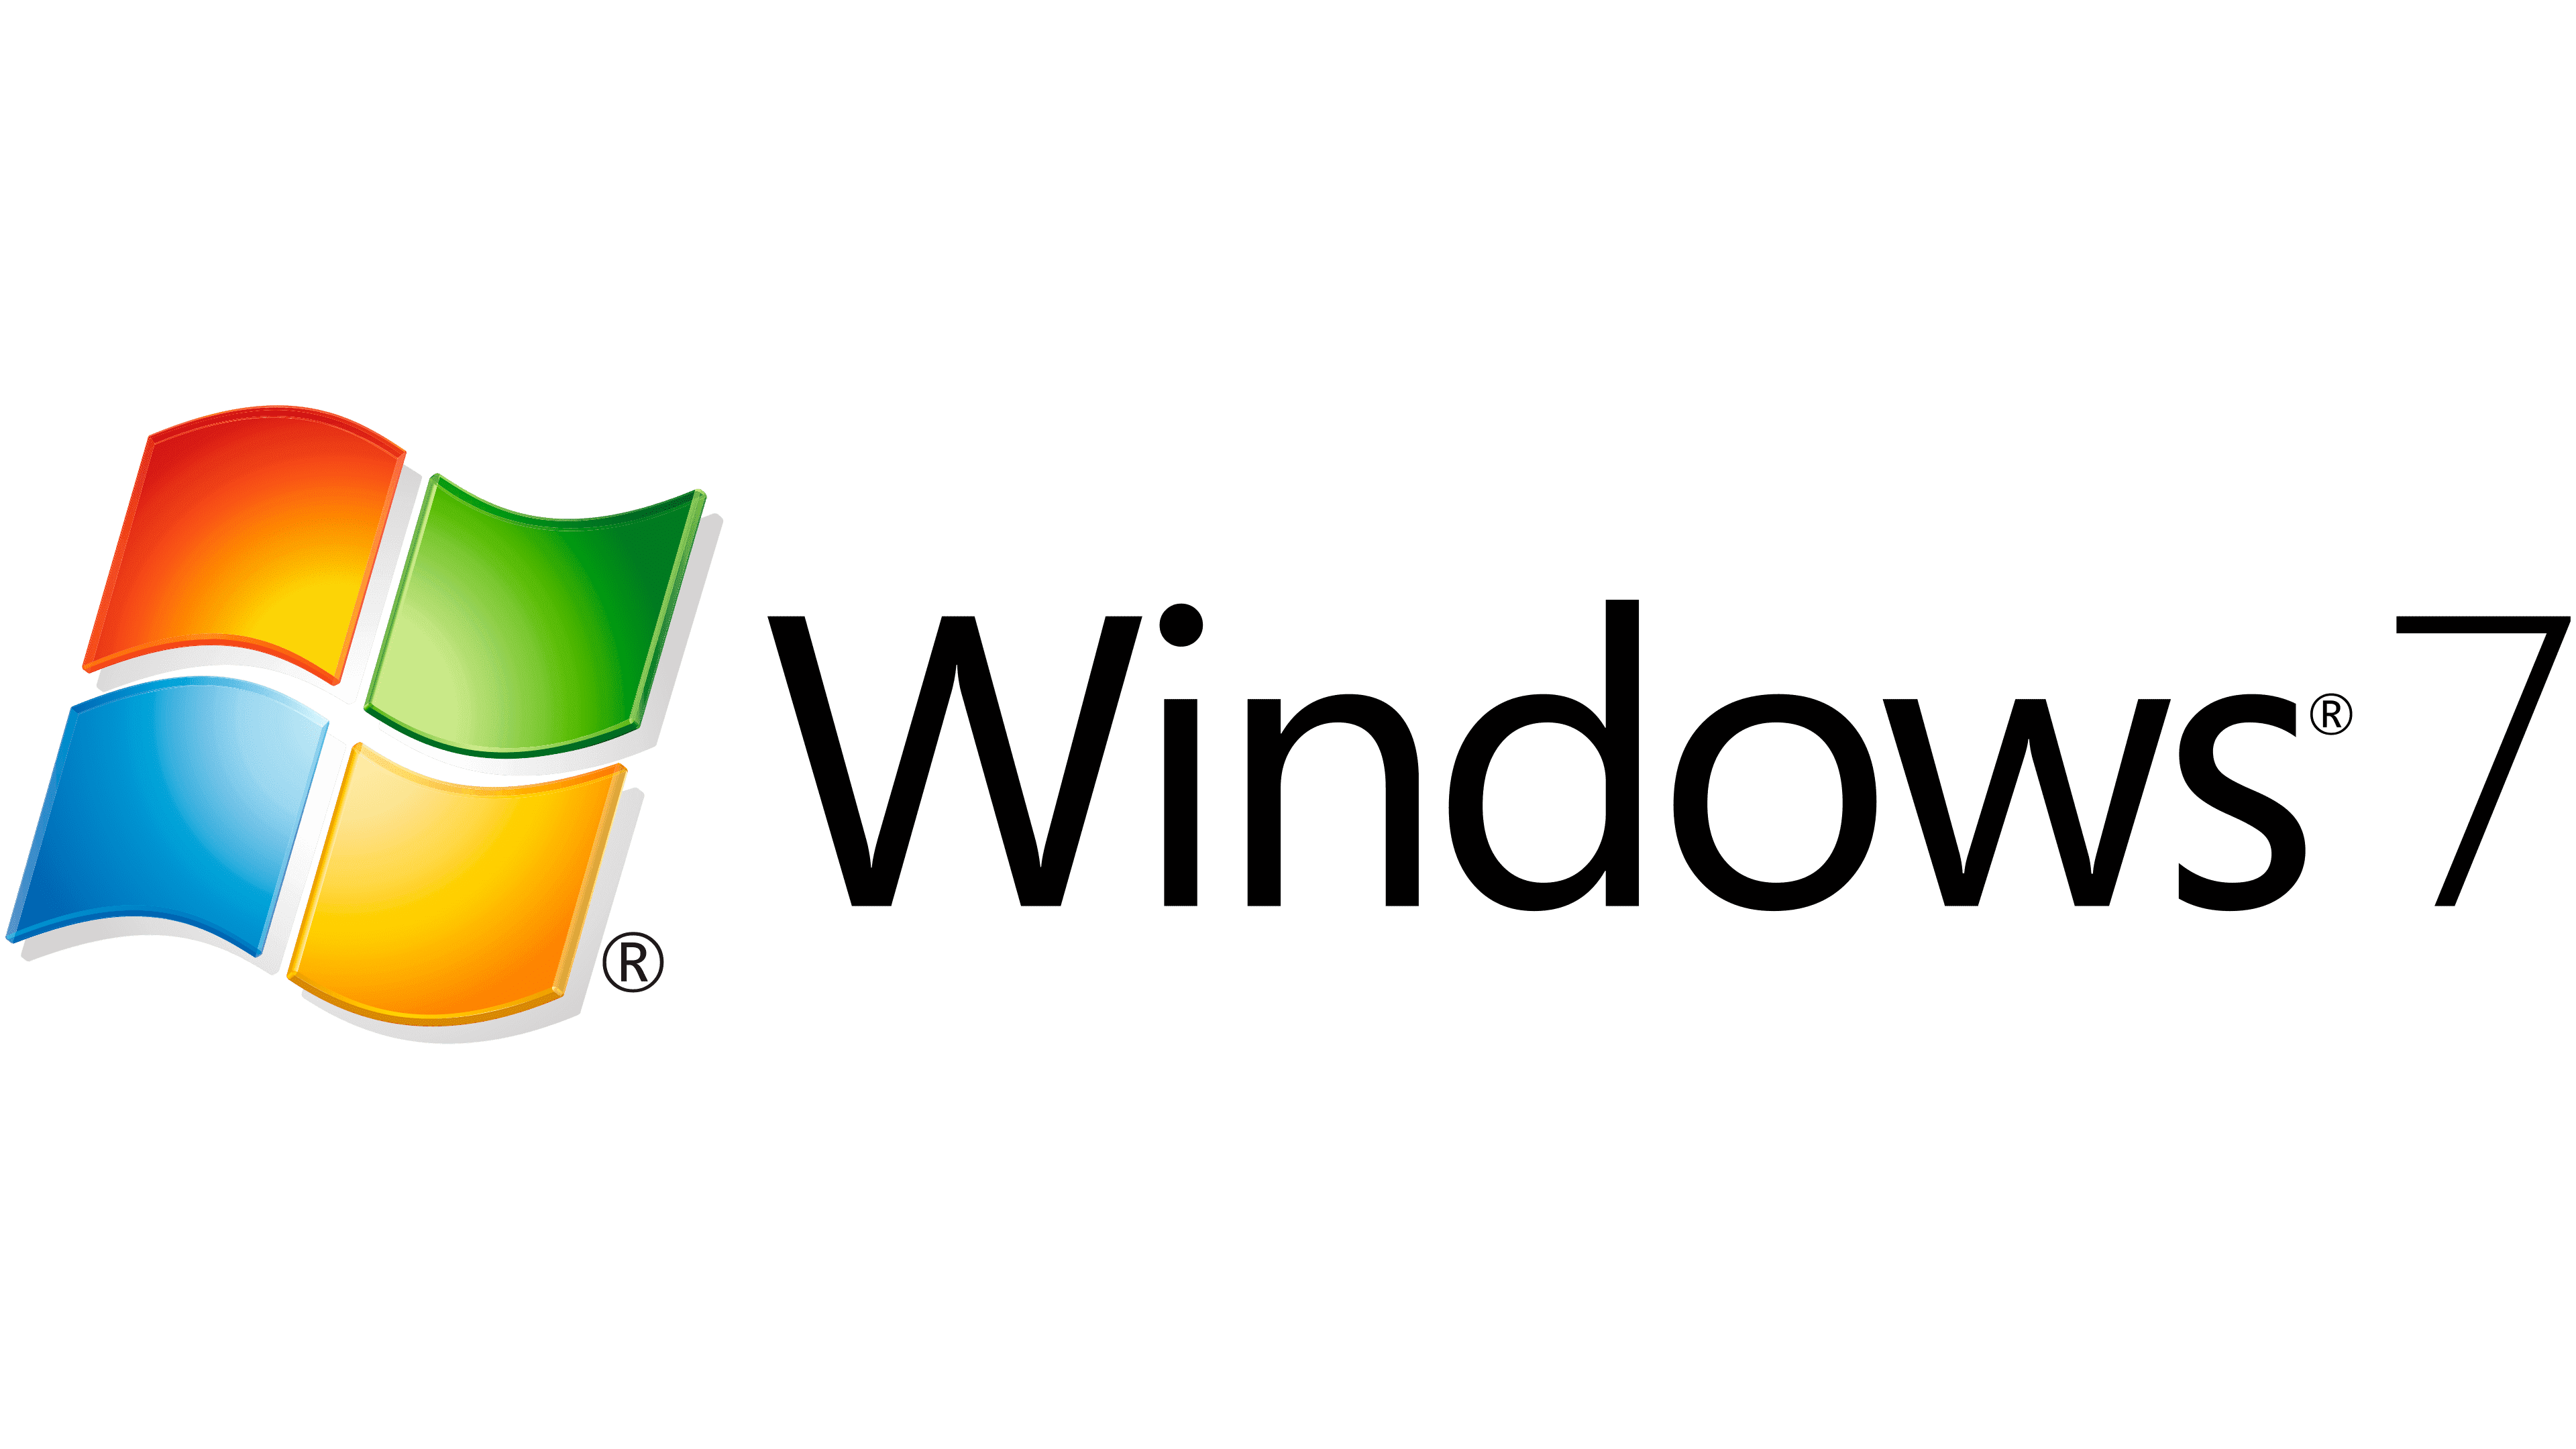 How to create windows 7 Logo Design - YouTube